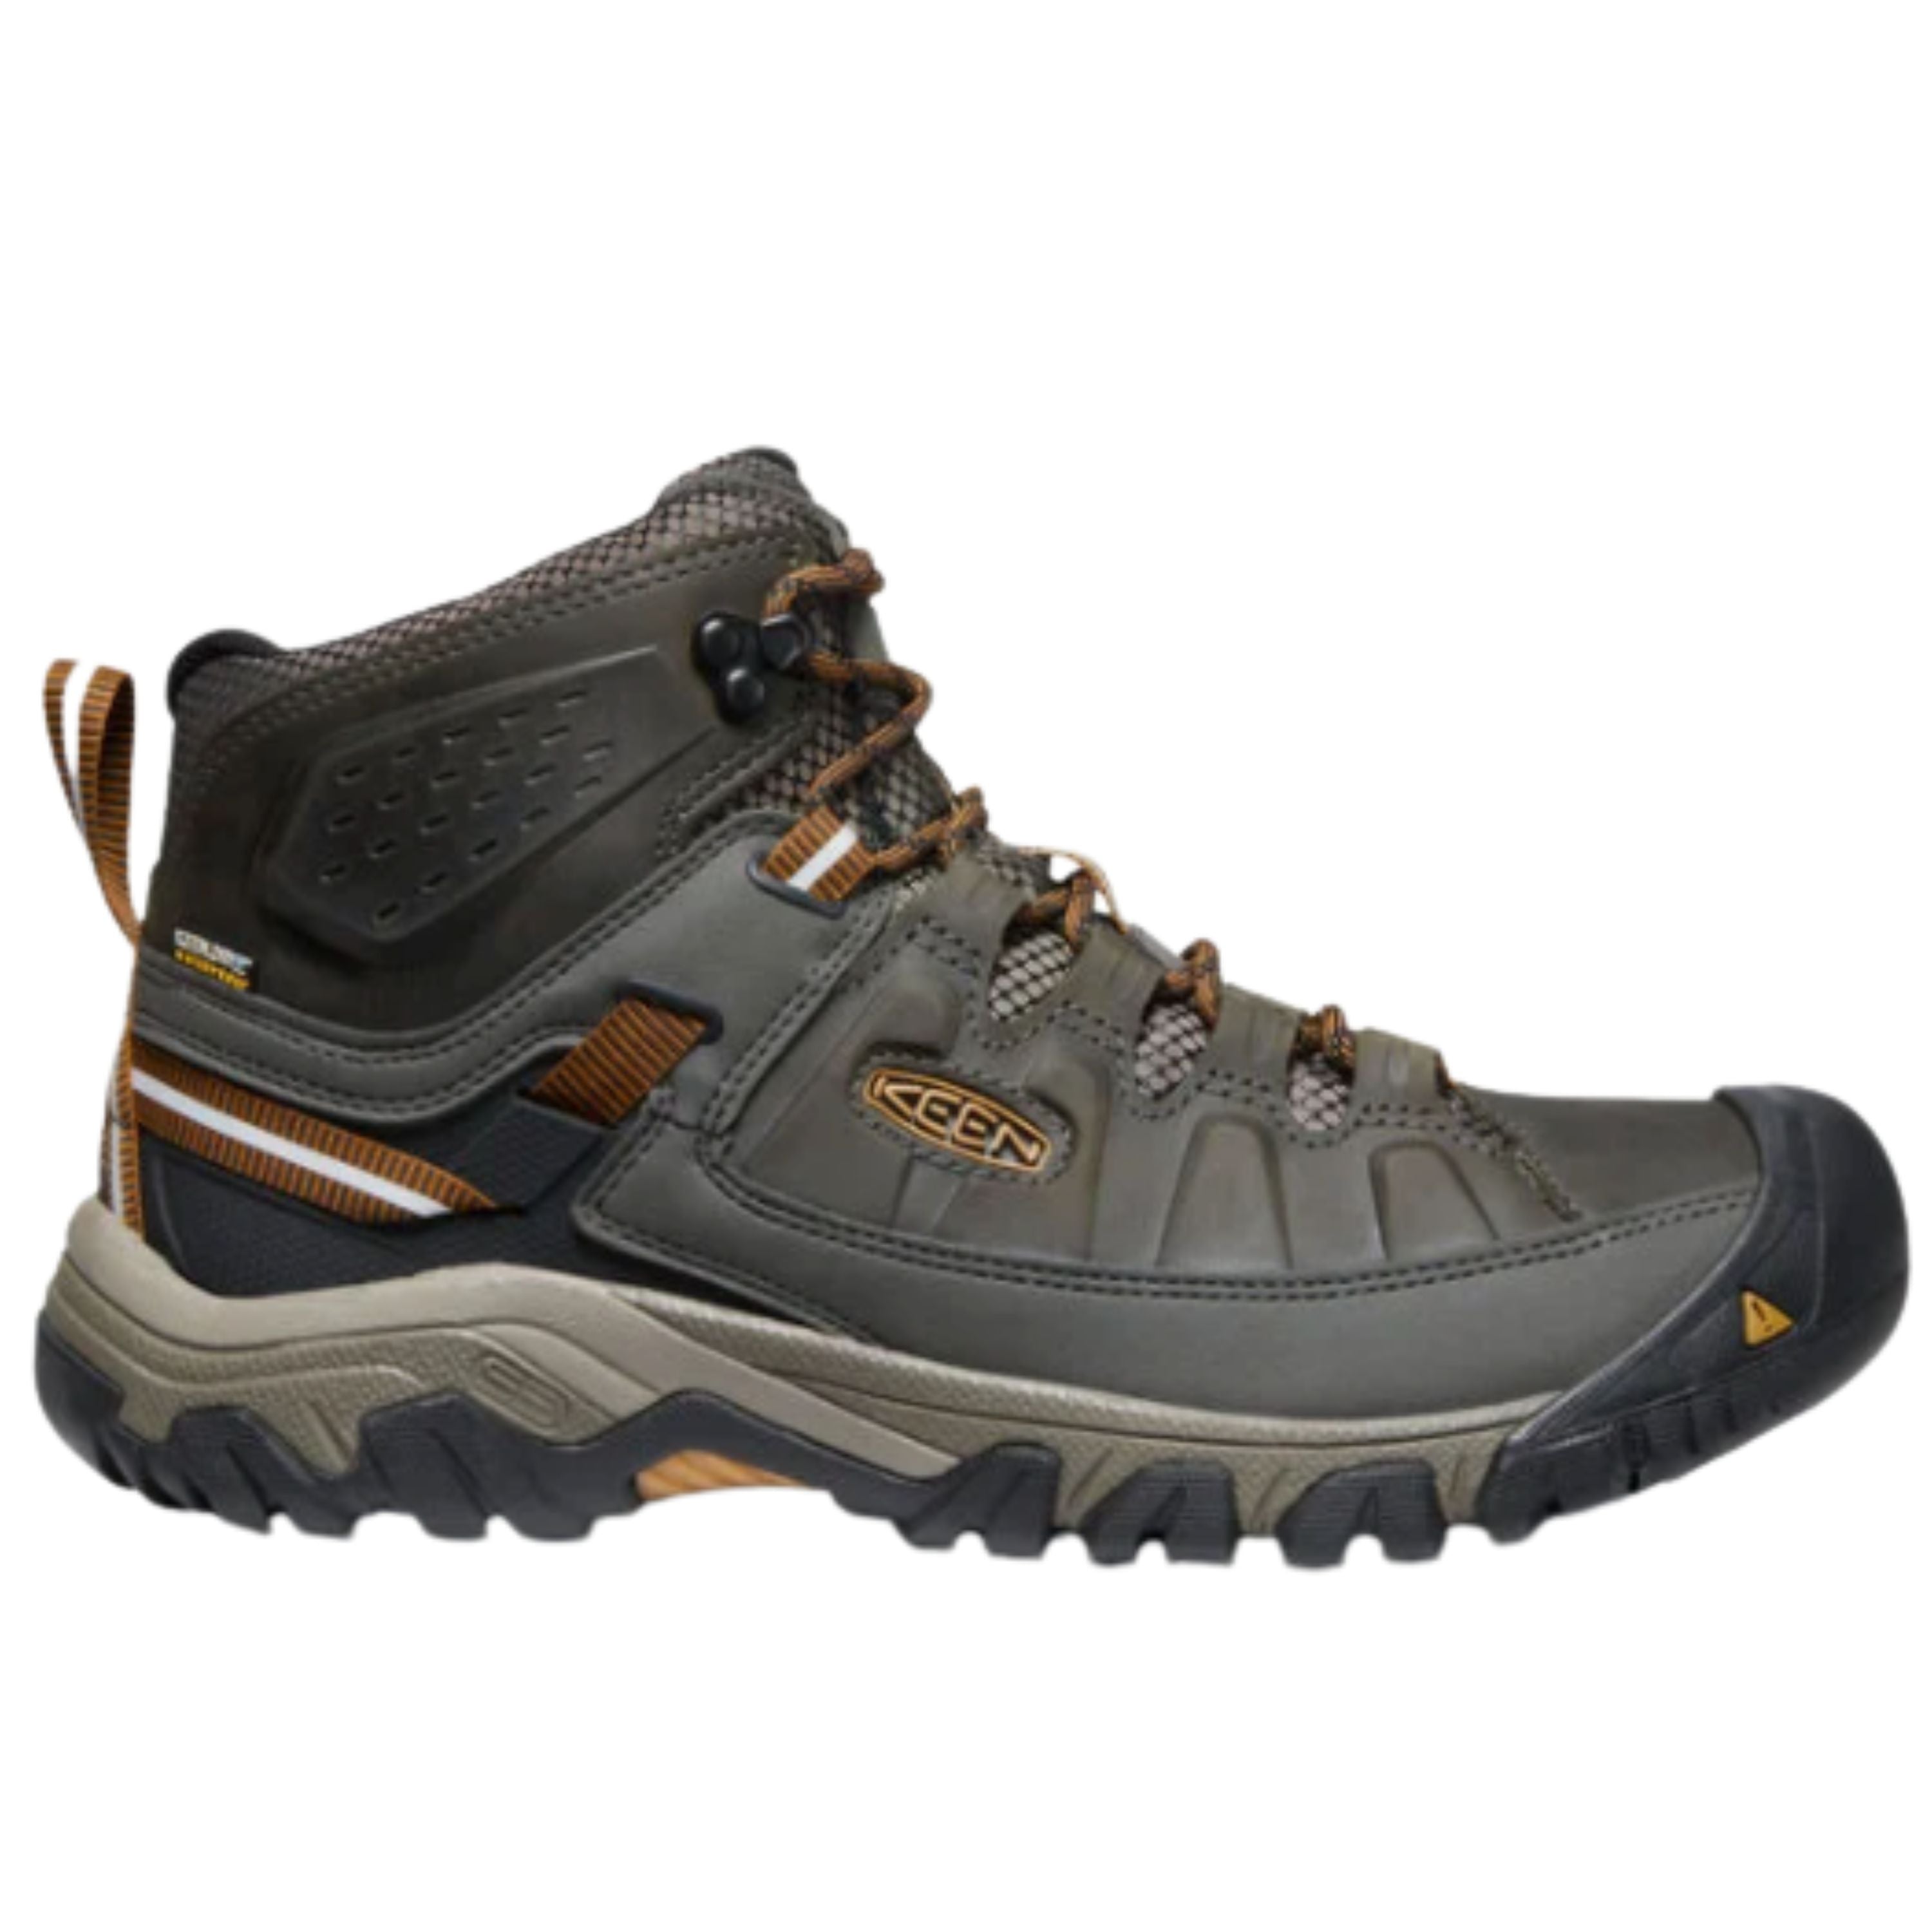 Bottes de randonnée "Targhee III Mid WP" - Homme||"Targhee III Mid WP" hiking boots - Men's